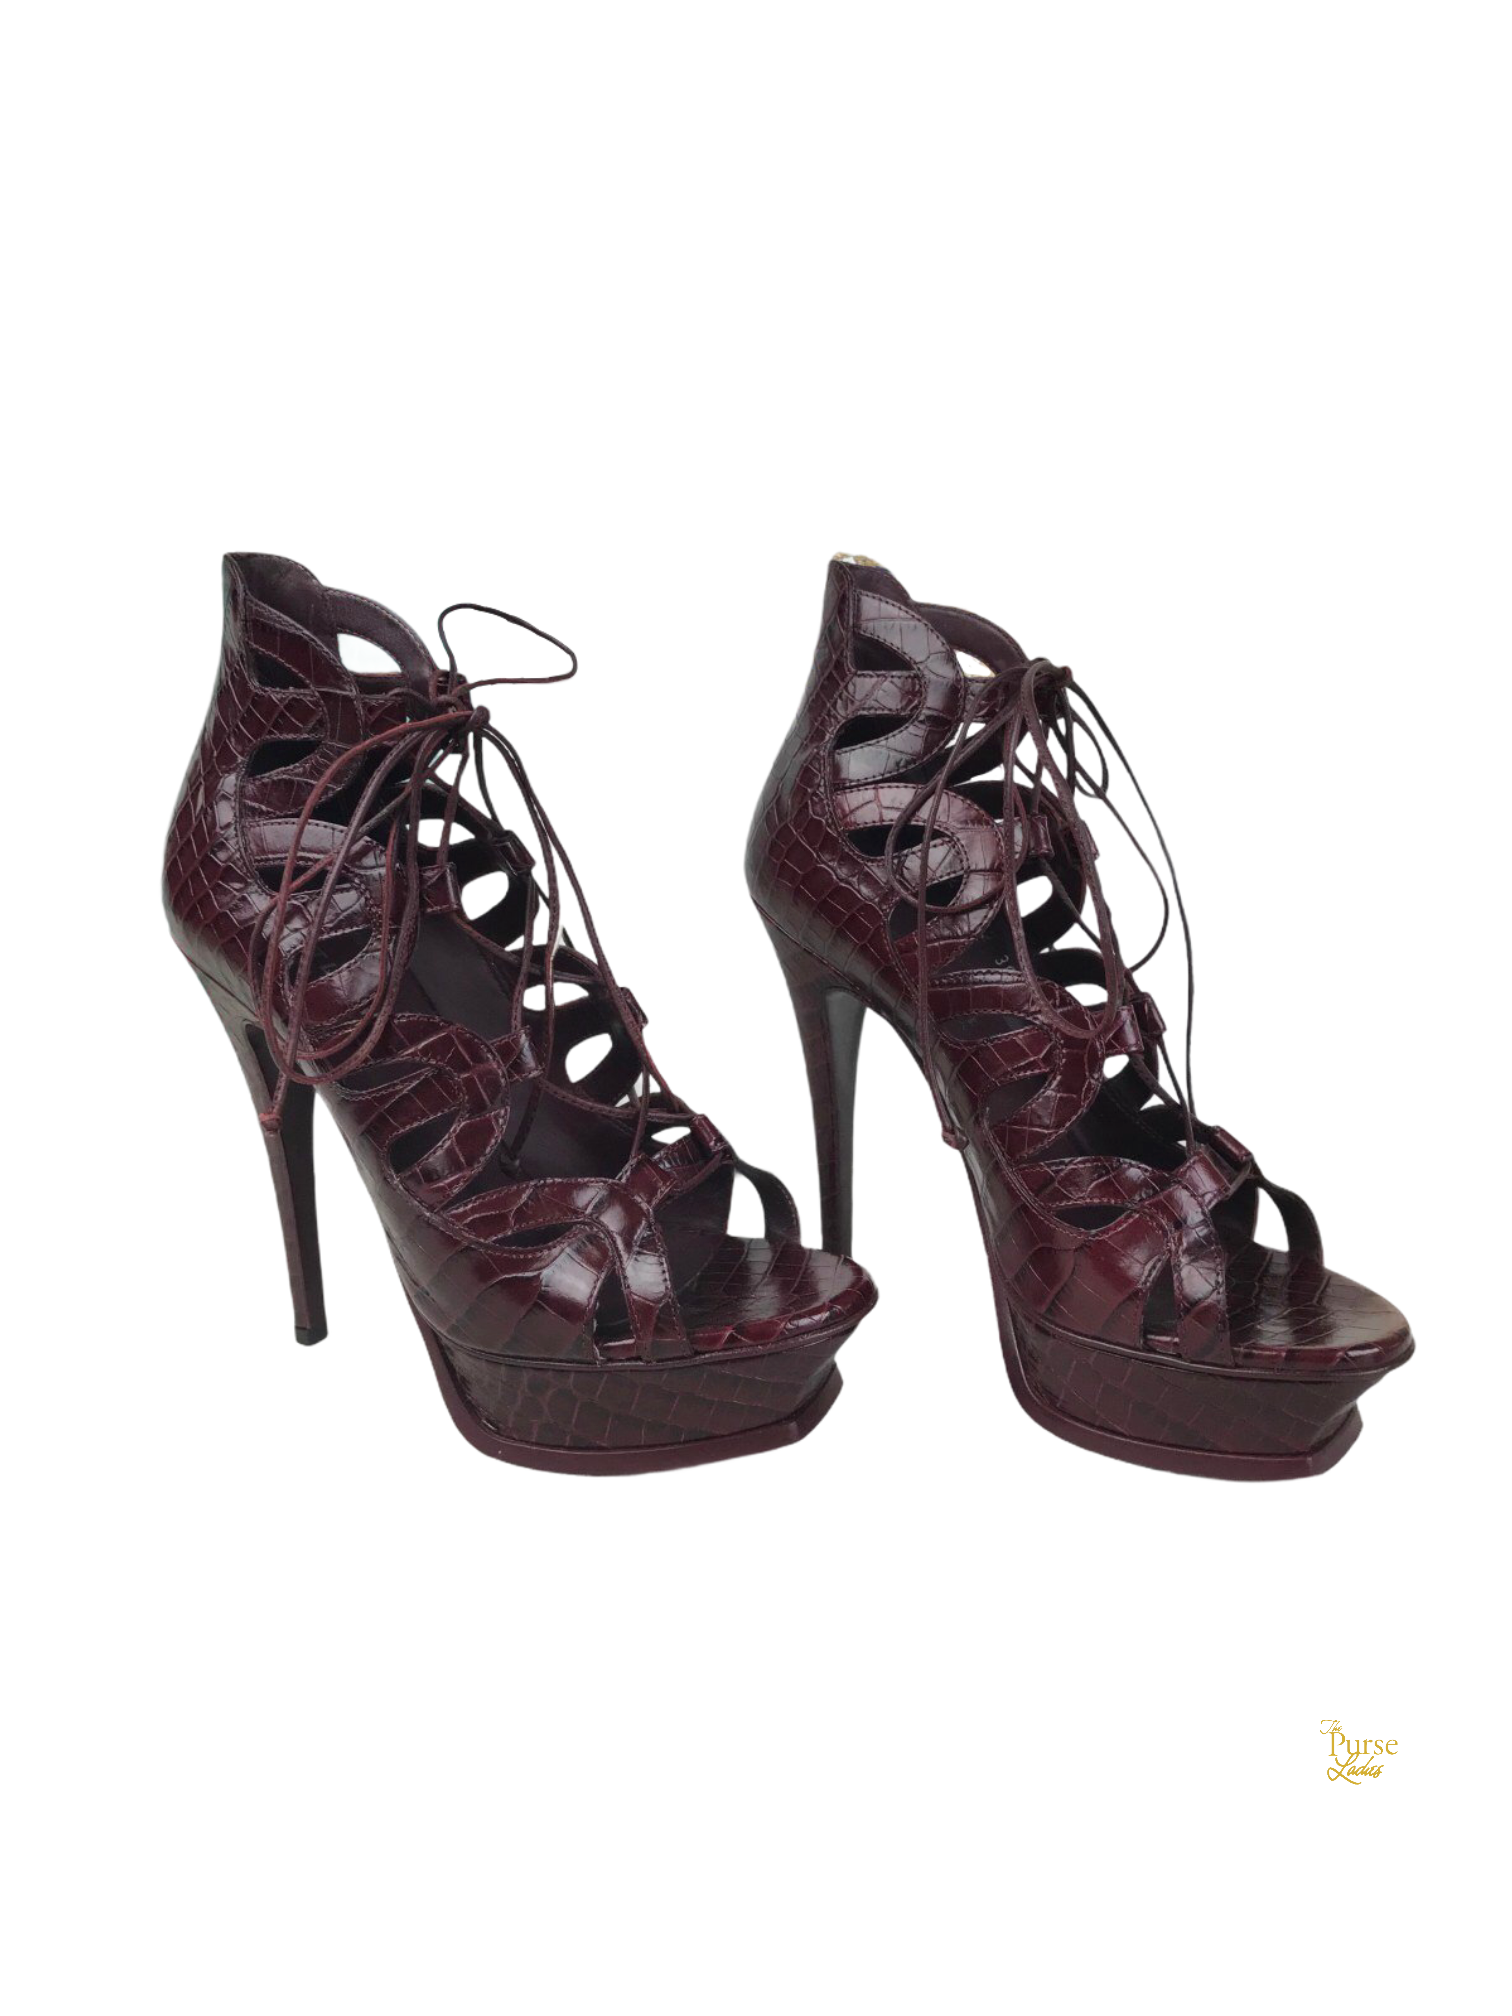 Yves Saint Laurent  Heels, Louis vuitton shoes heels, Shoes heels stilettos